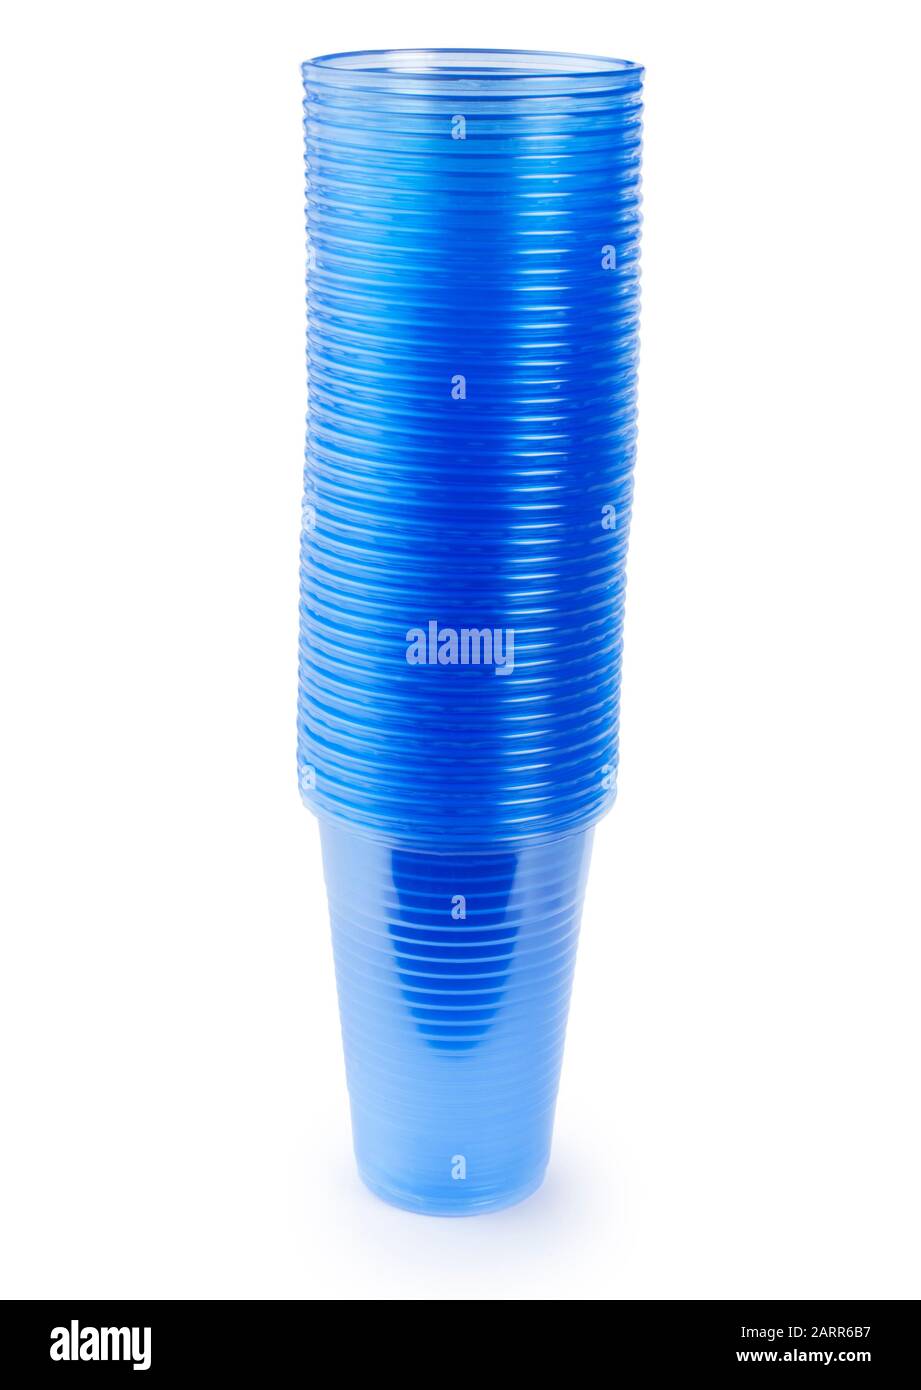 https://c8.alamy.com/comp/2ARR6B7/studio-shot-of-a-pile-of-disposable-plastic-cups-cut-out-against-a-white-background-john-gollop-2ARR6B7.jpg